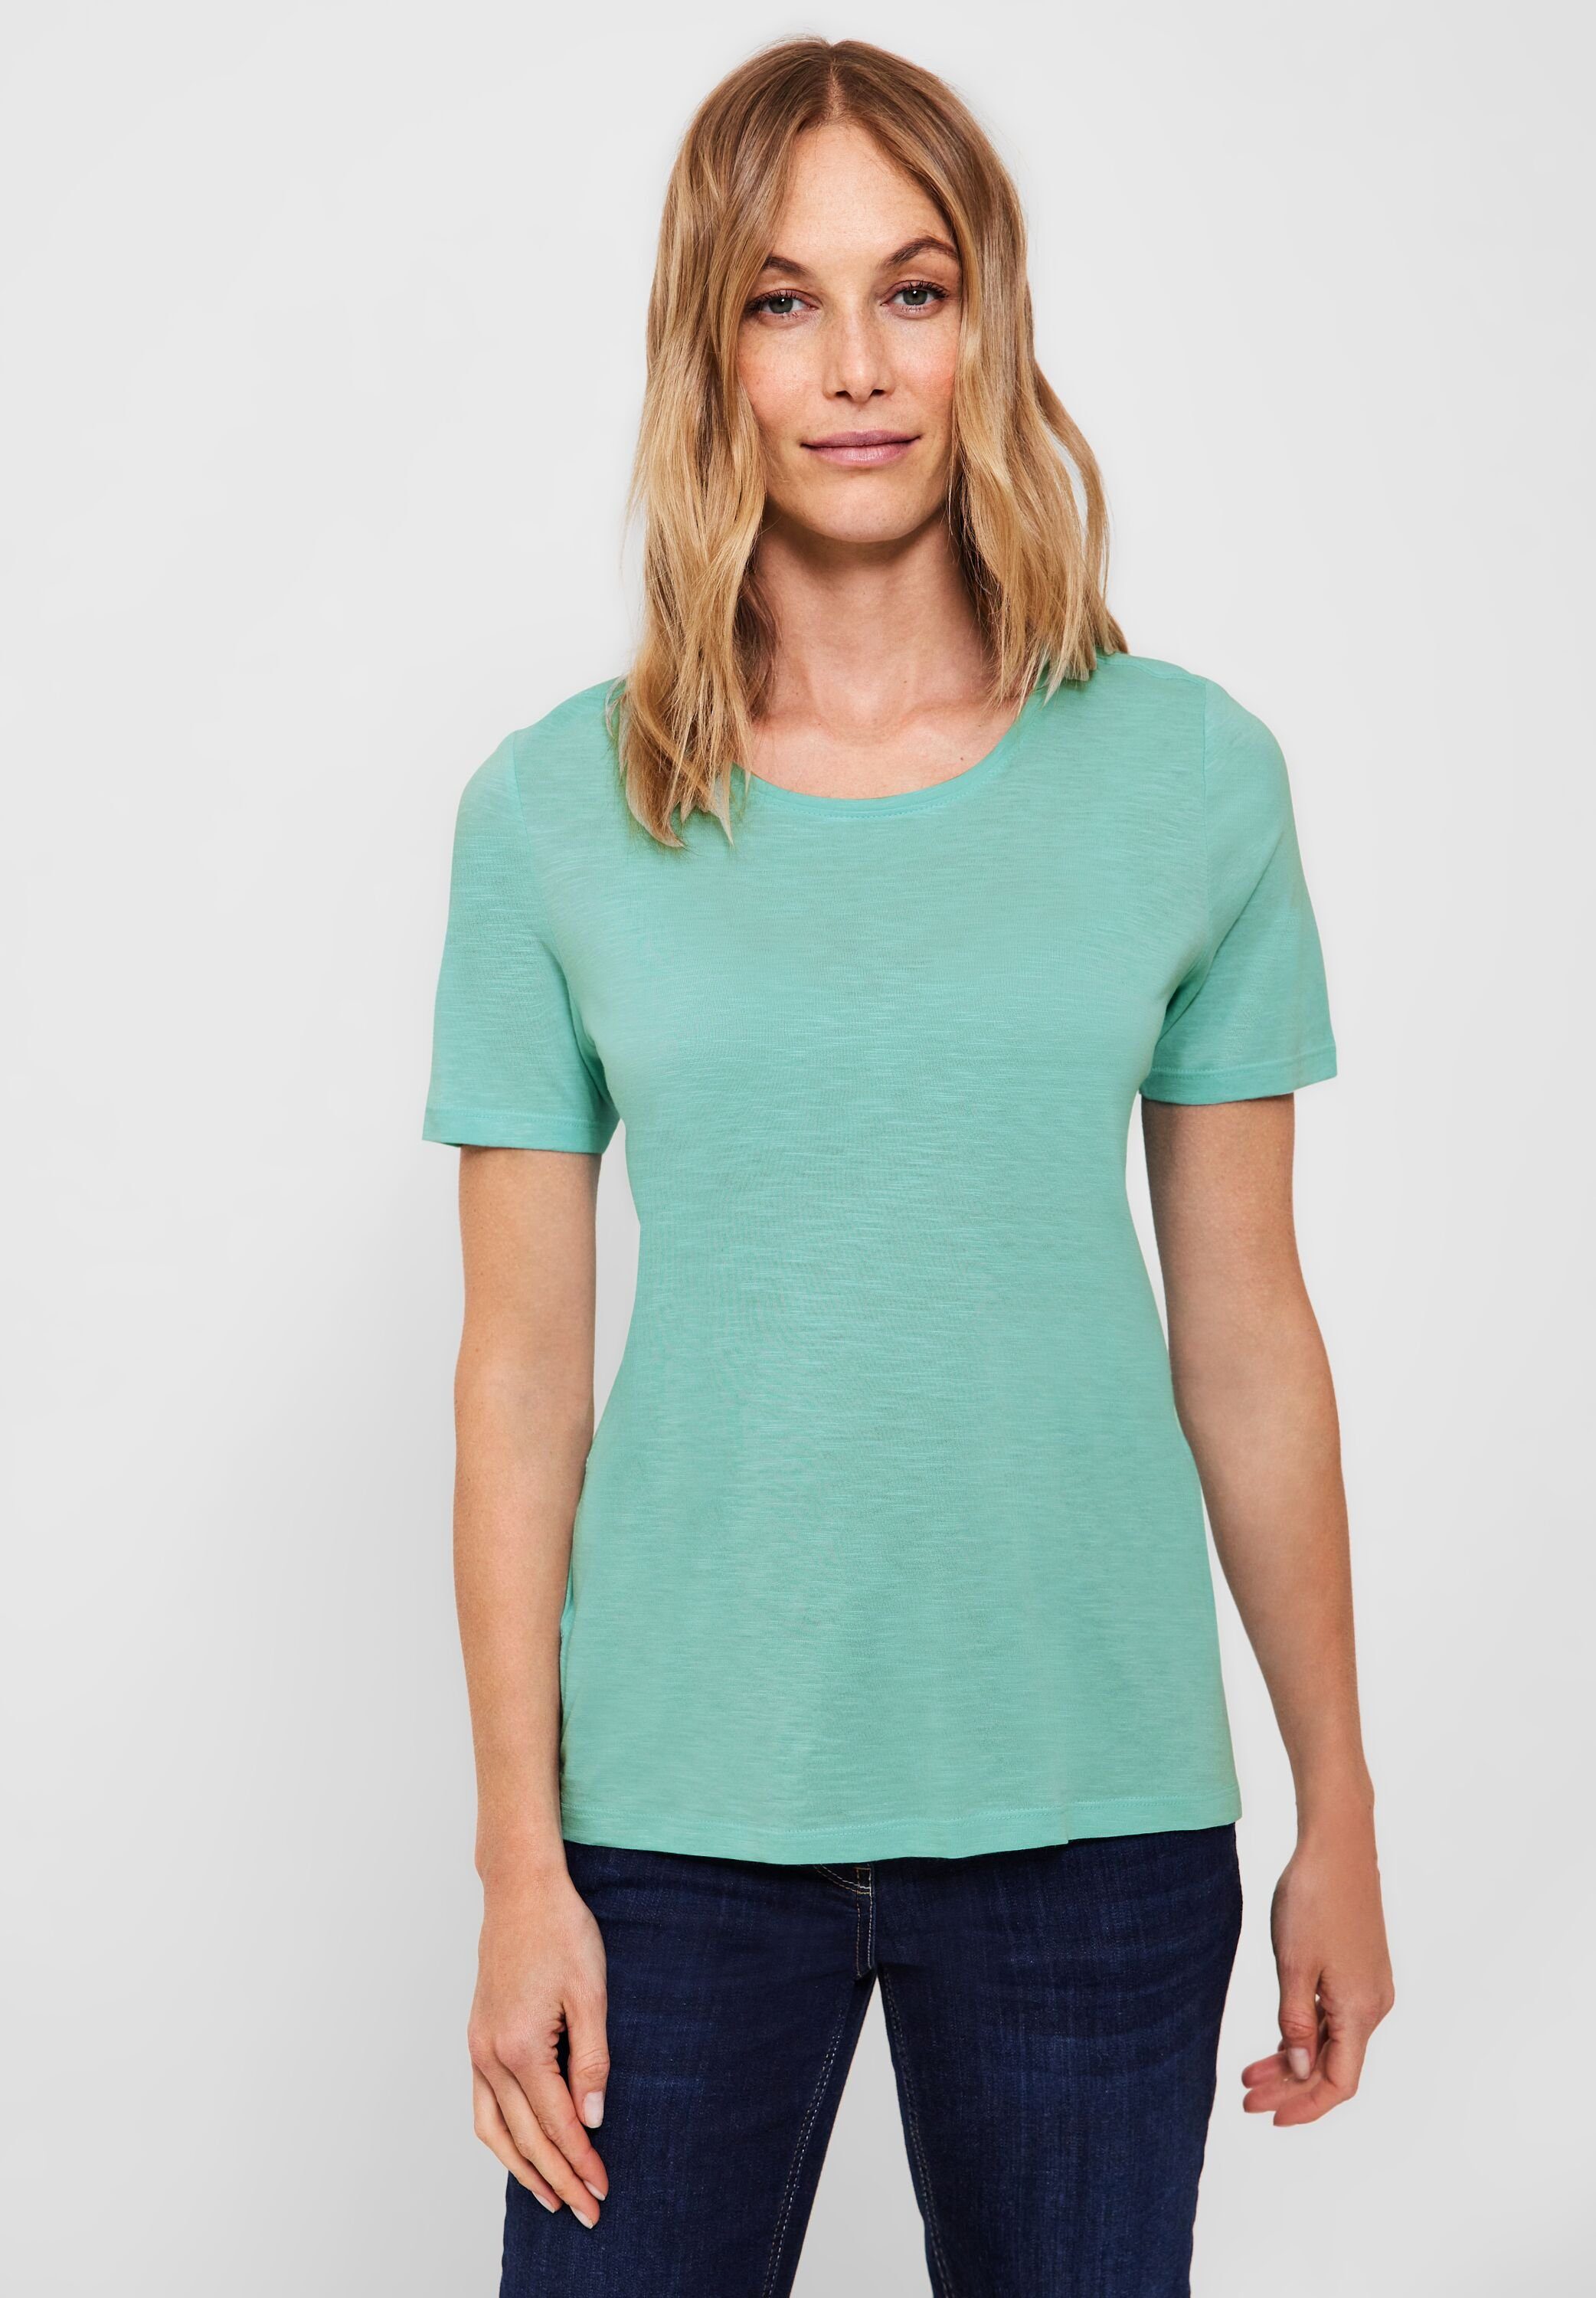 Cecil Baumwolle cool aus green T-Shirt mint reiner